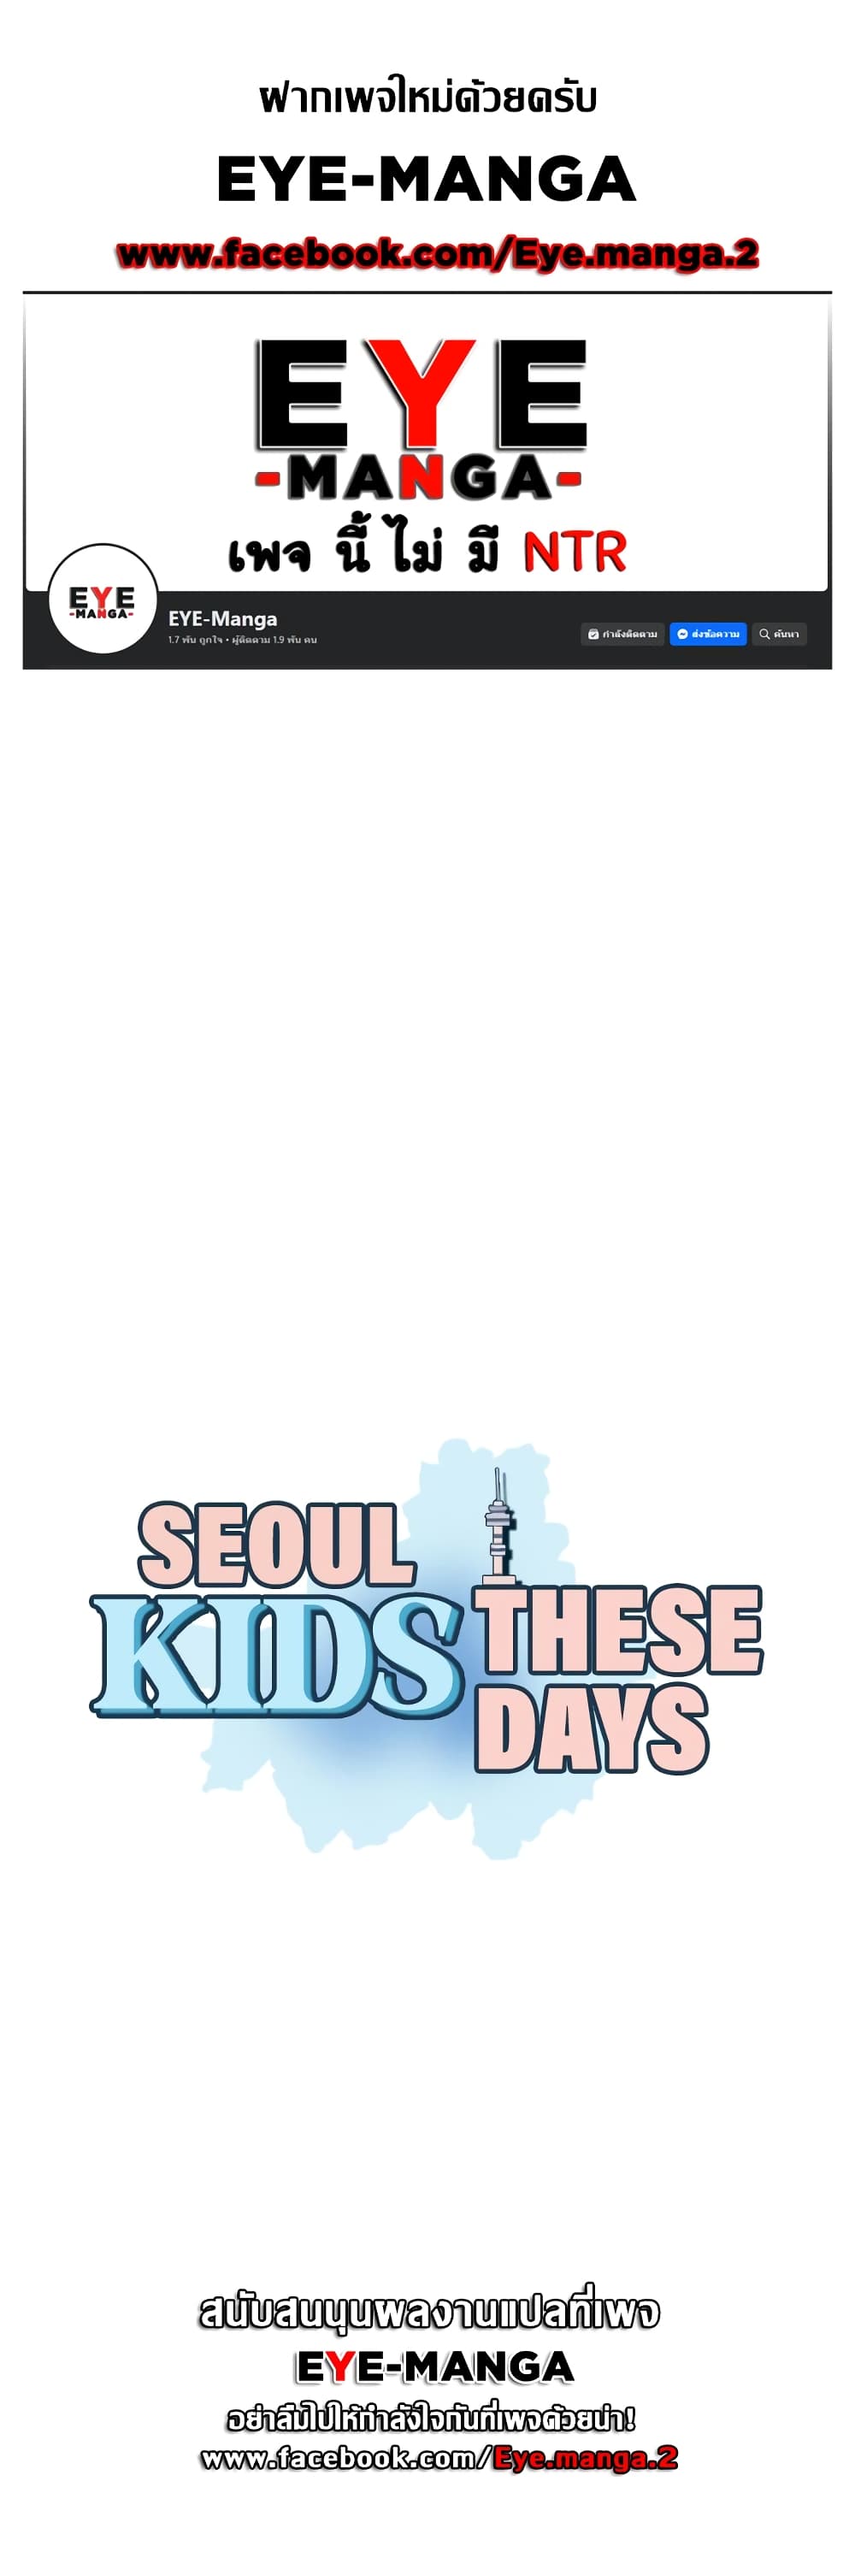 Seoul Kids These Days 14-14